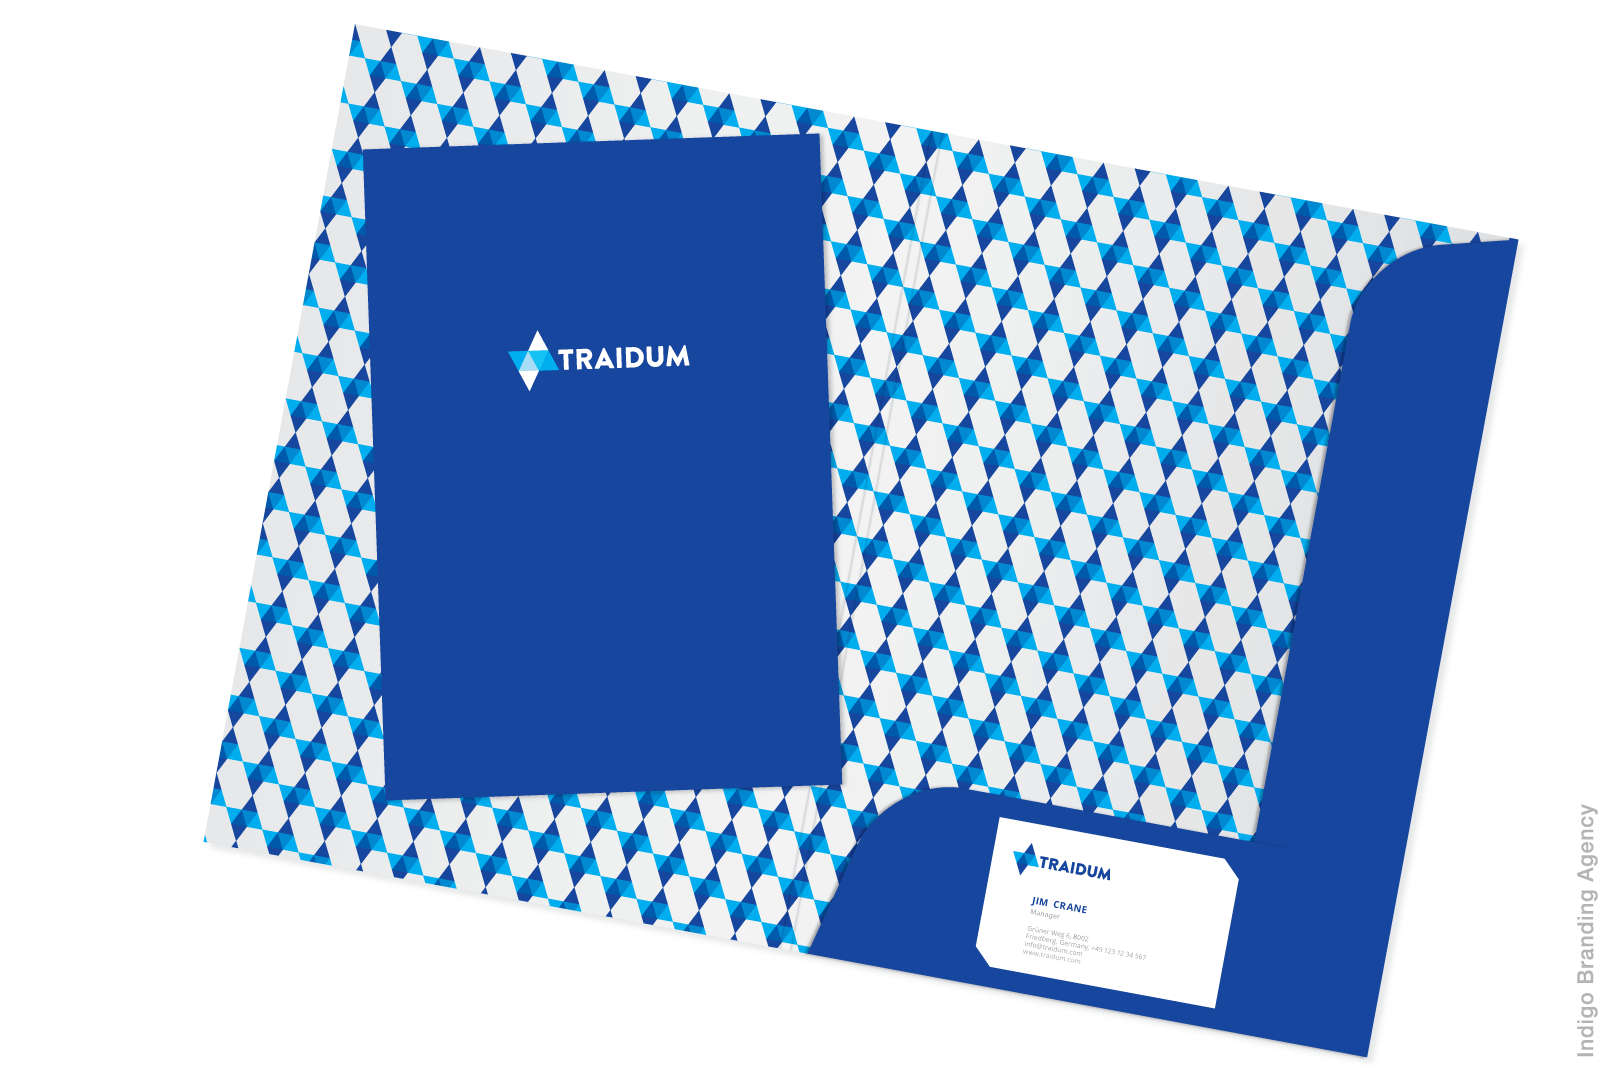 Traidum branding and logo design by Indigo branding